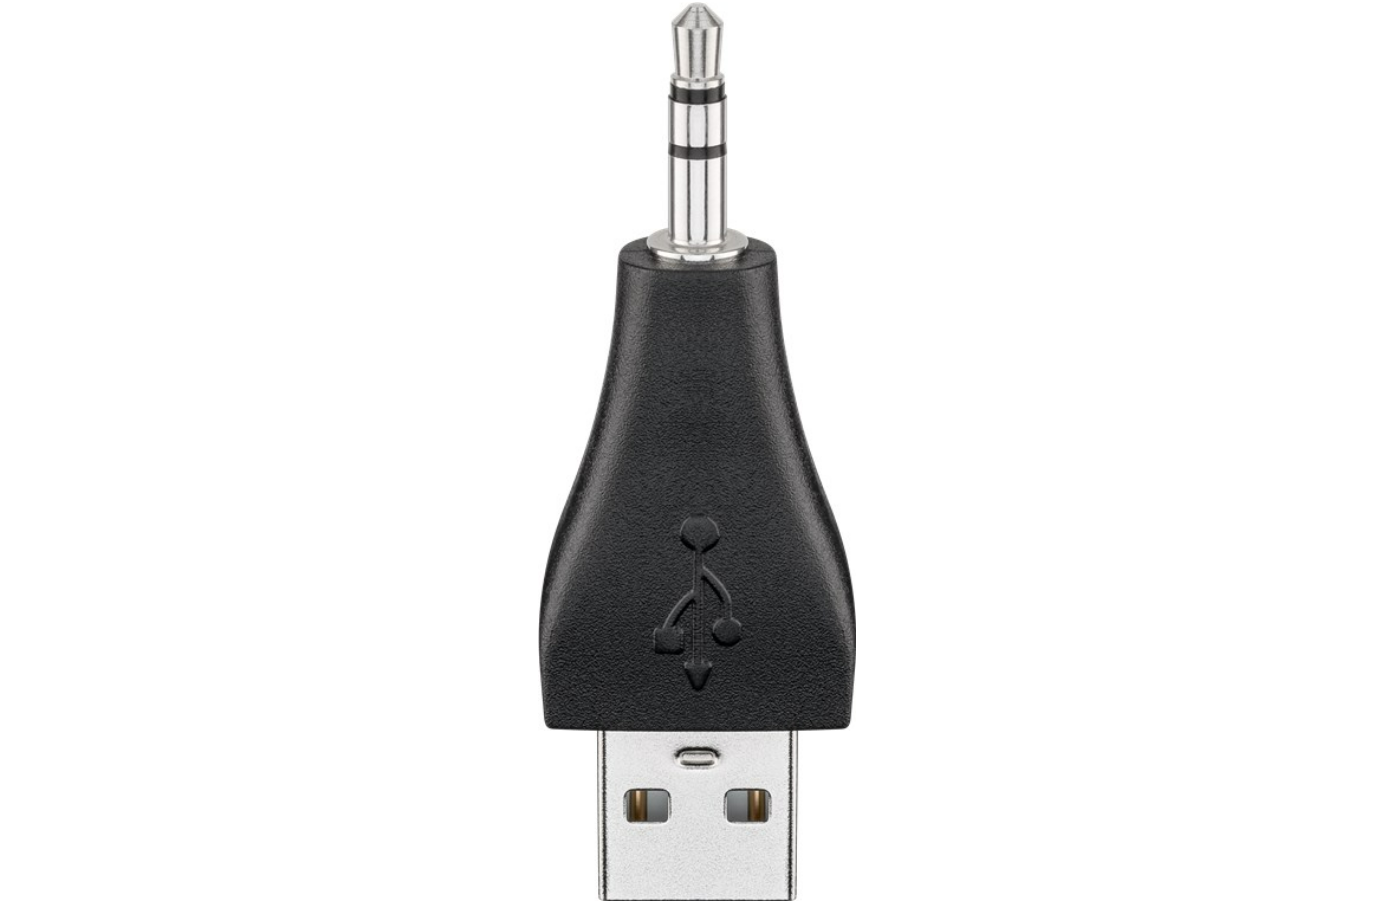 USB 2.0 Hi-Speed-Adapter